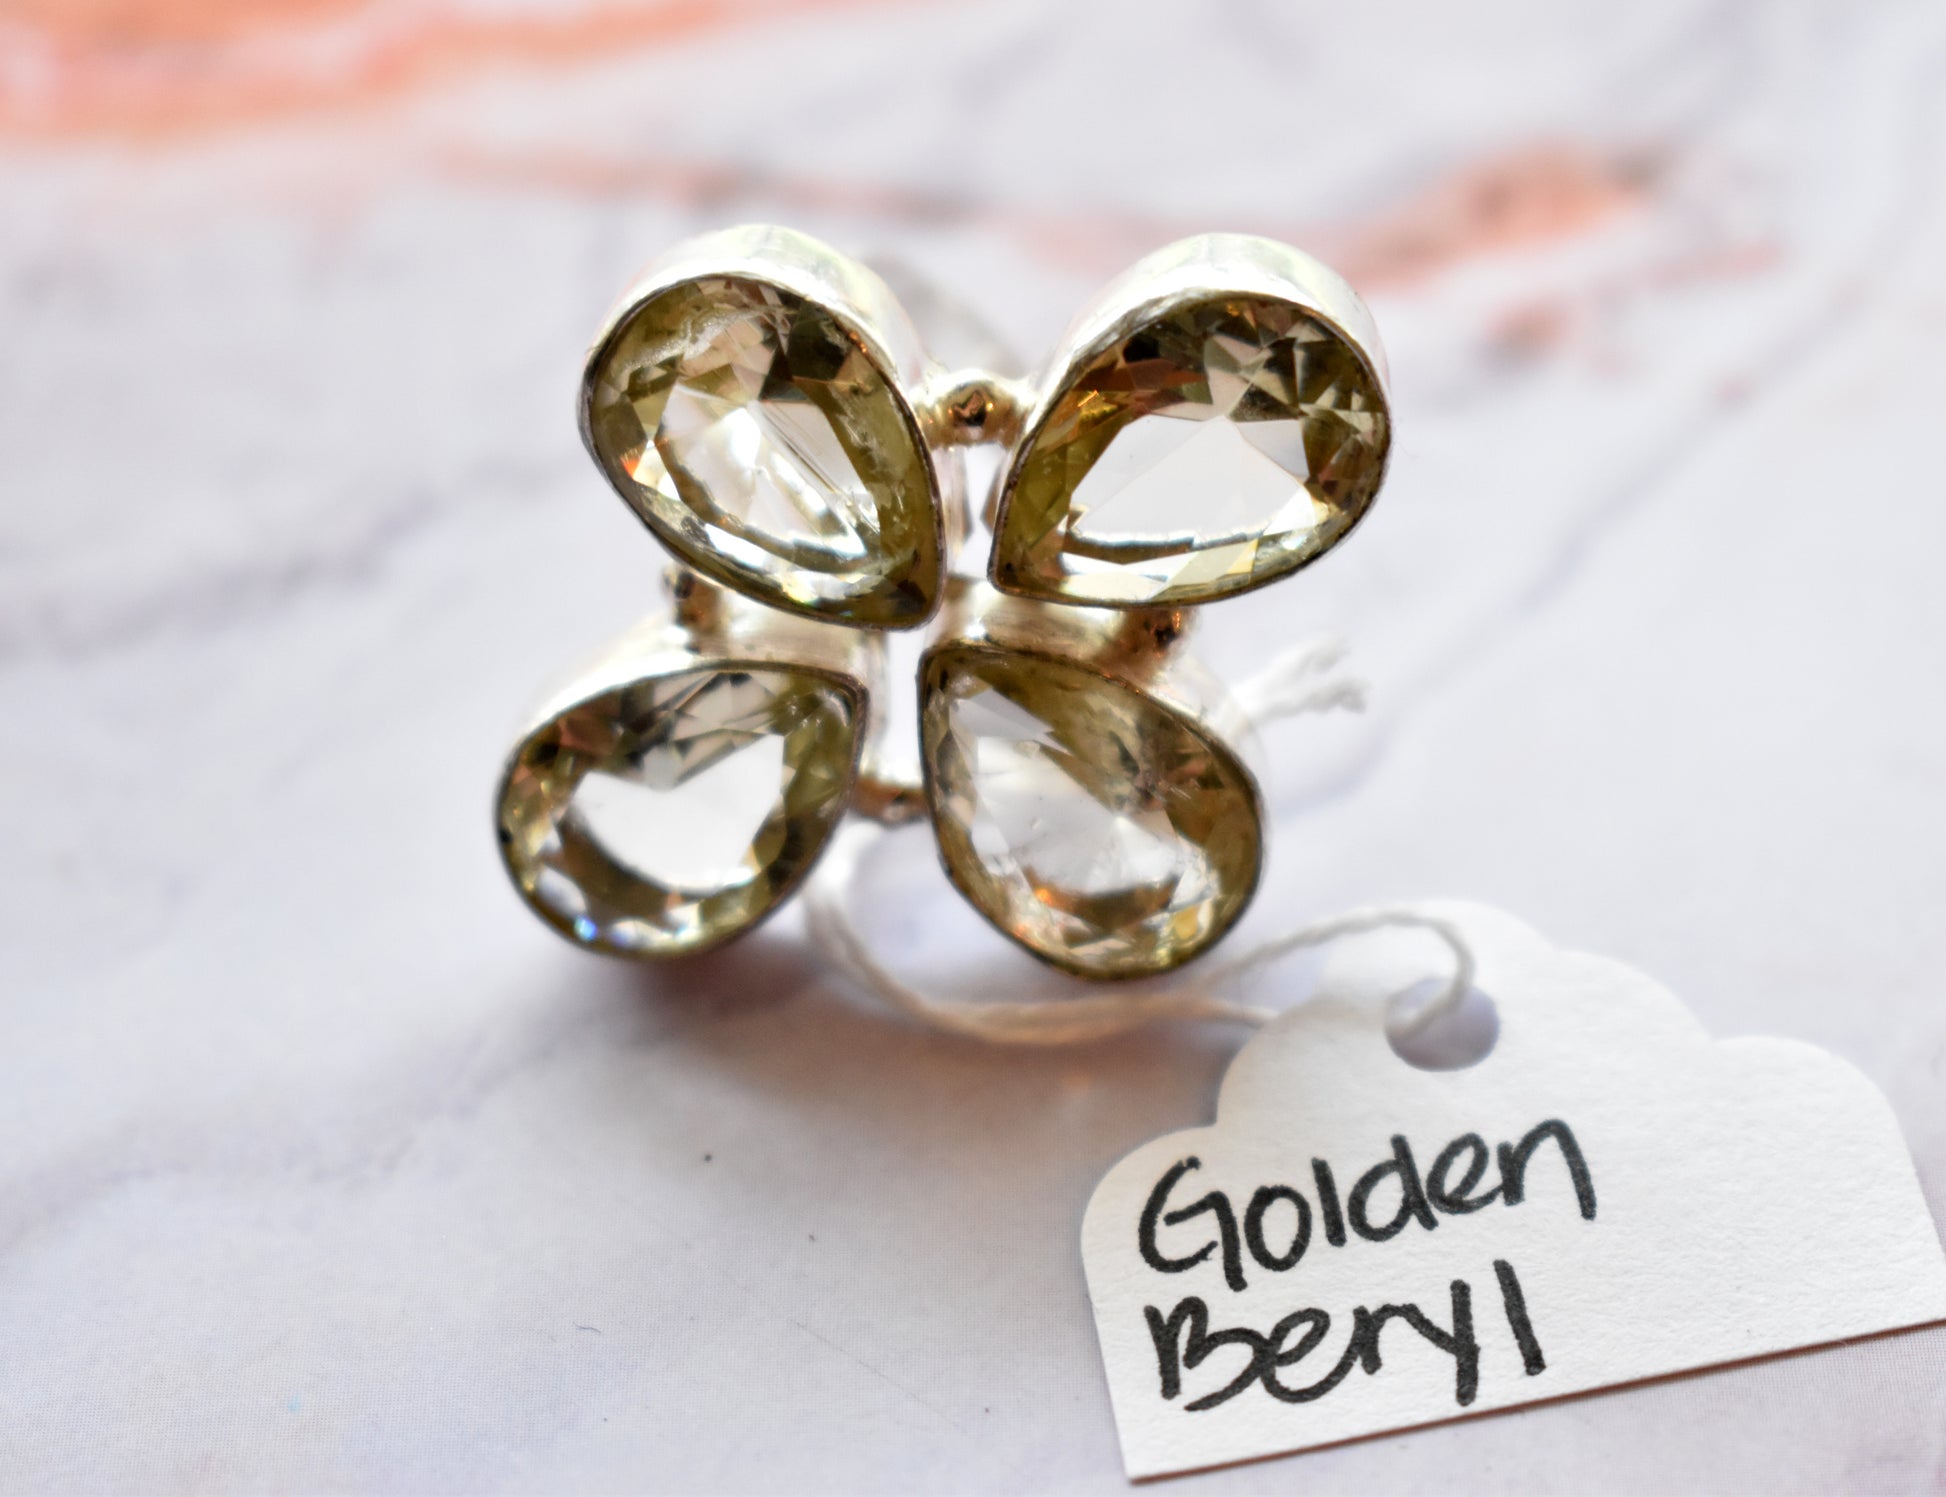 stones-of-transformation - Heliodor (Golden Beryl) Ring (Size 7) - Stones of Transformation - 